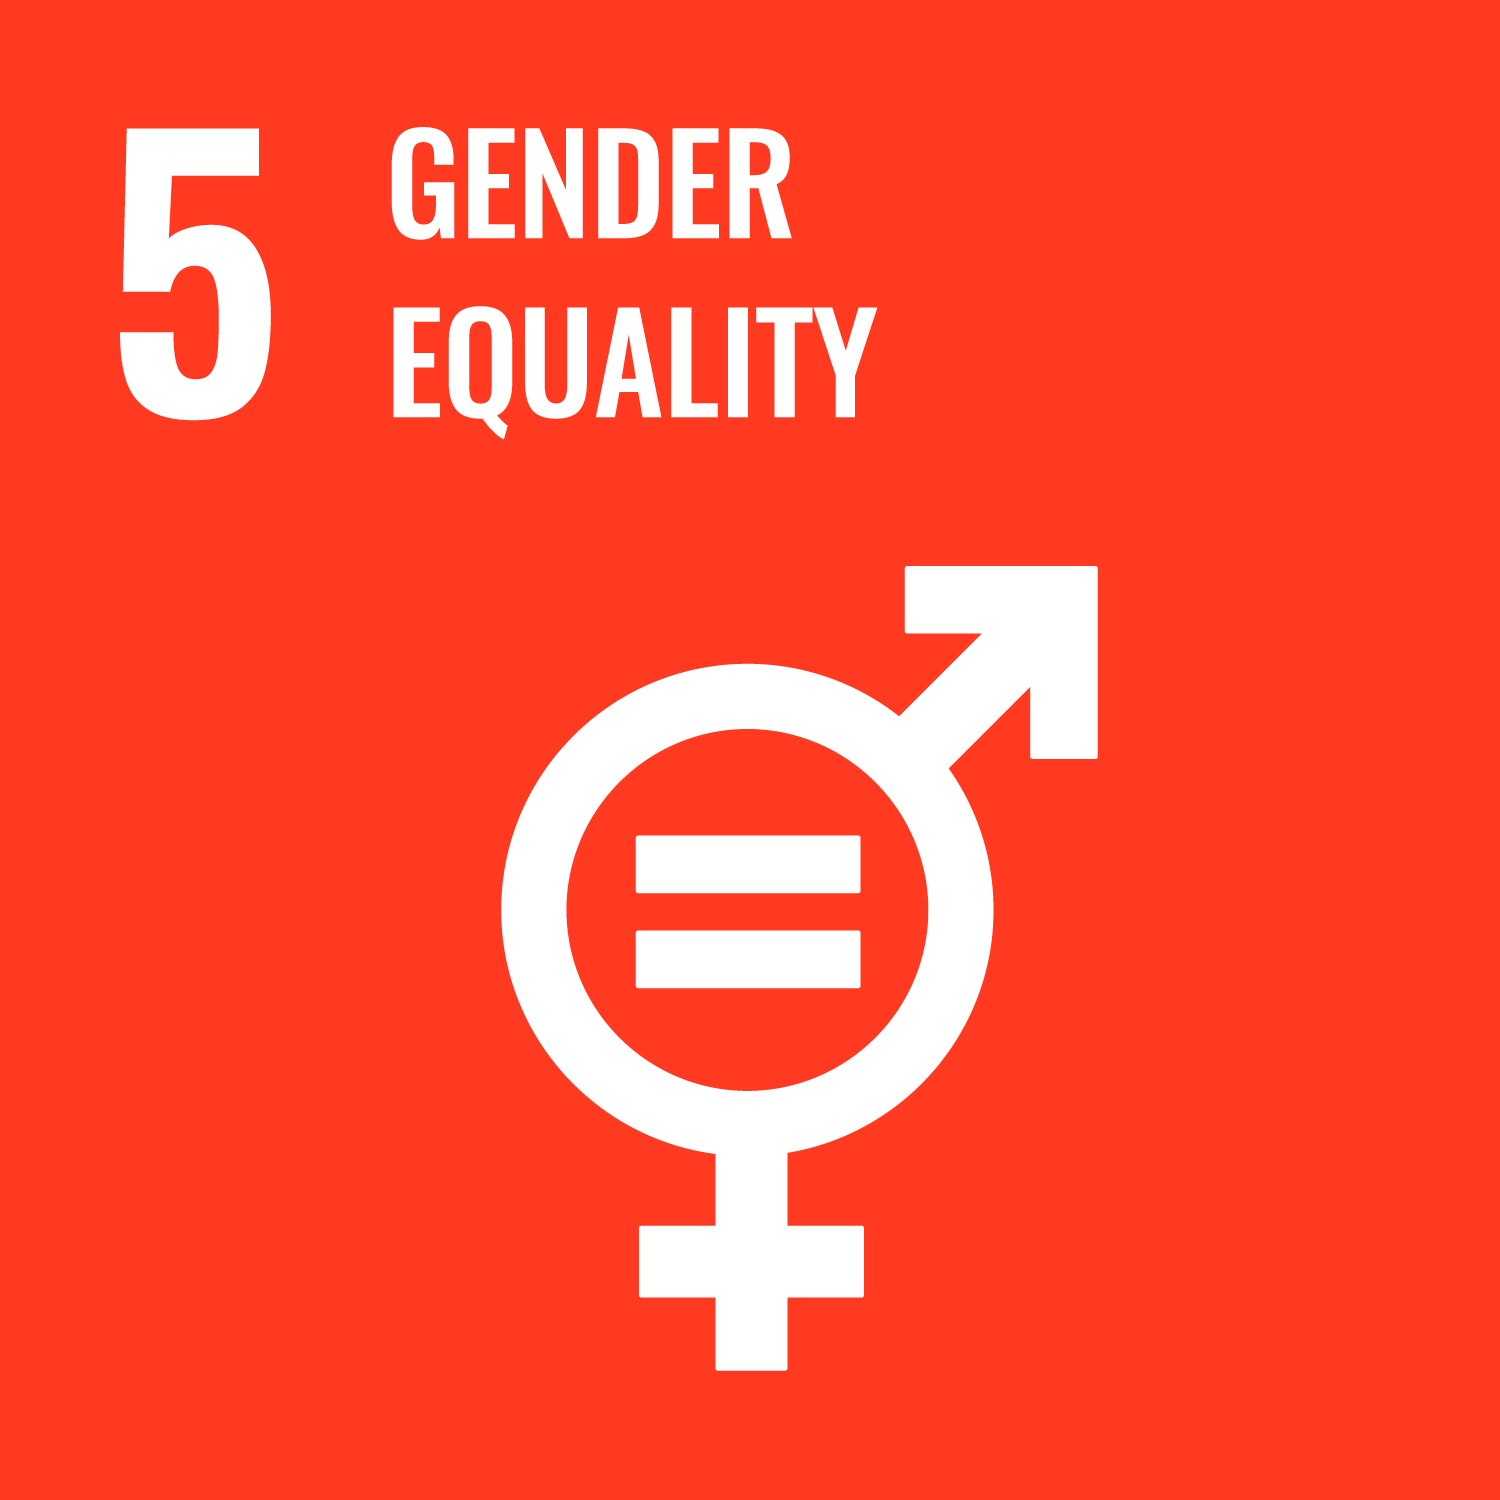 Sustainable Development Goal: SDG 5 "Gender Equality"